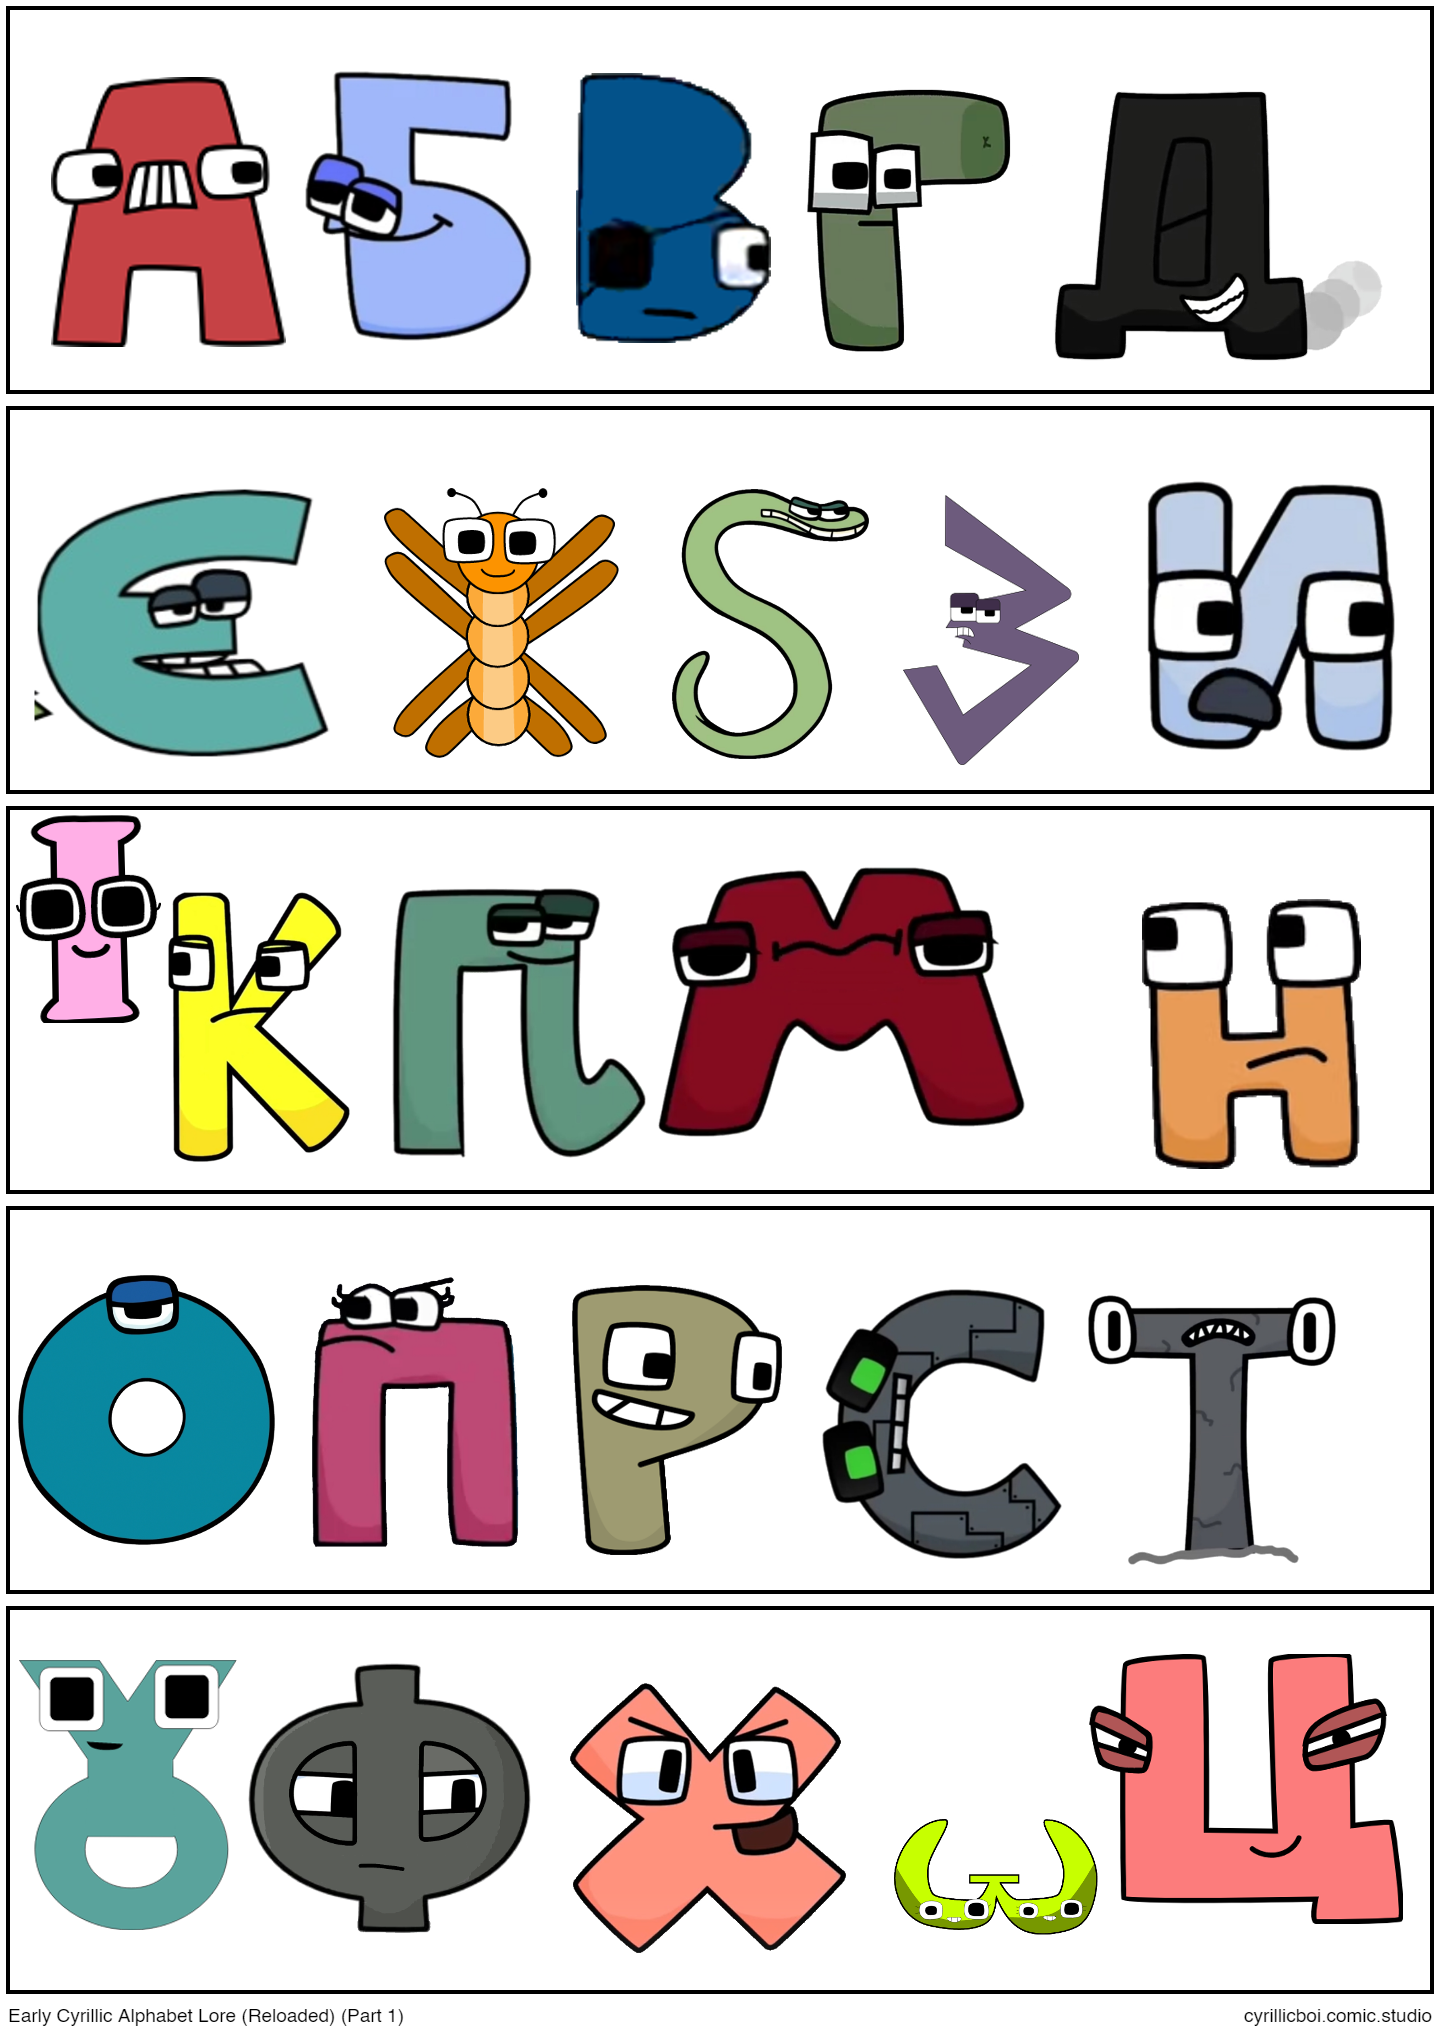 Old Russian Alphabet Lore - Comic Studio